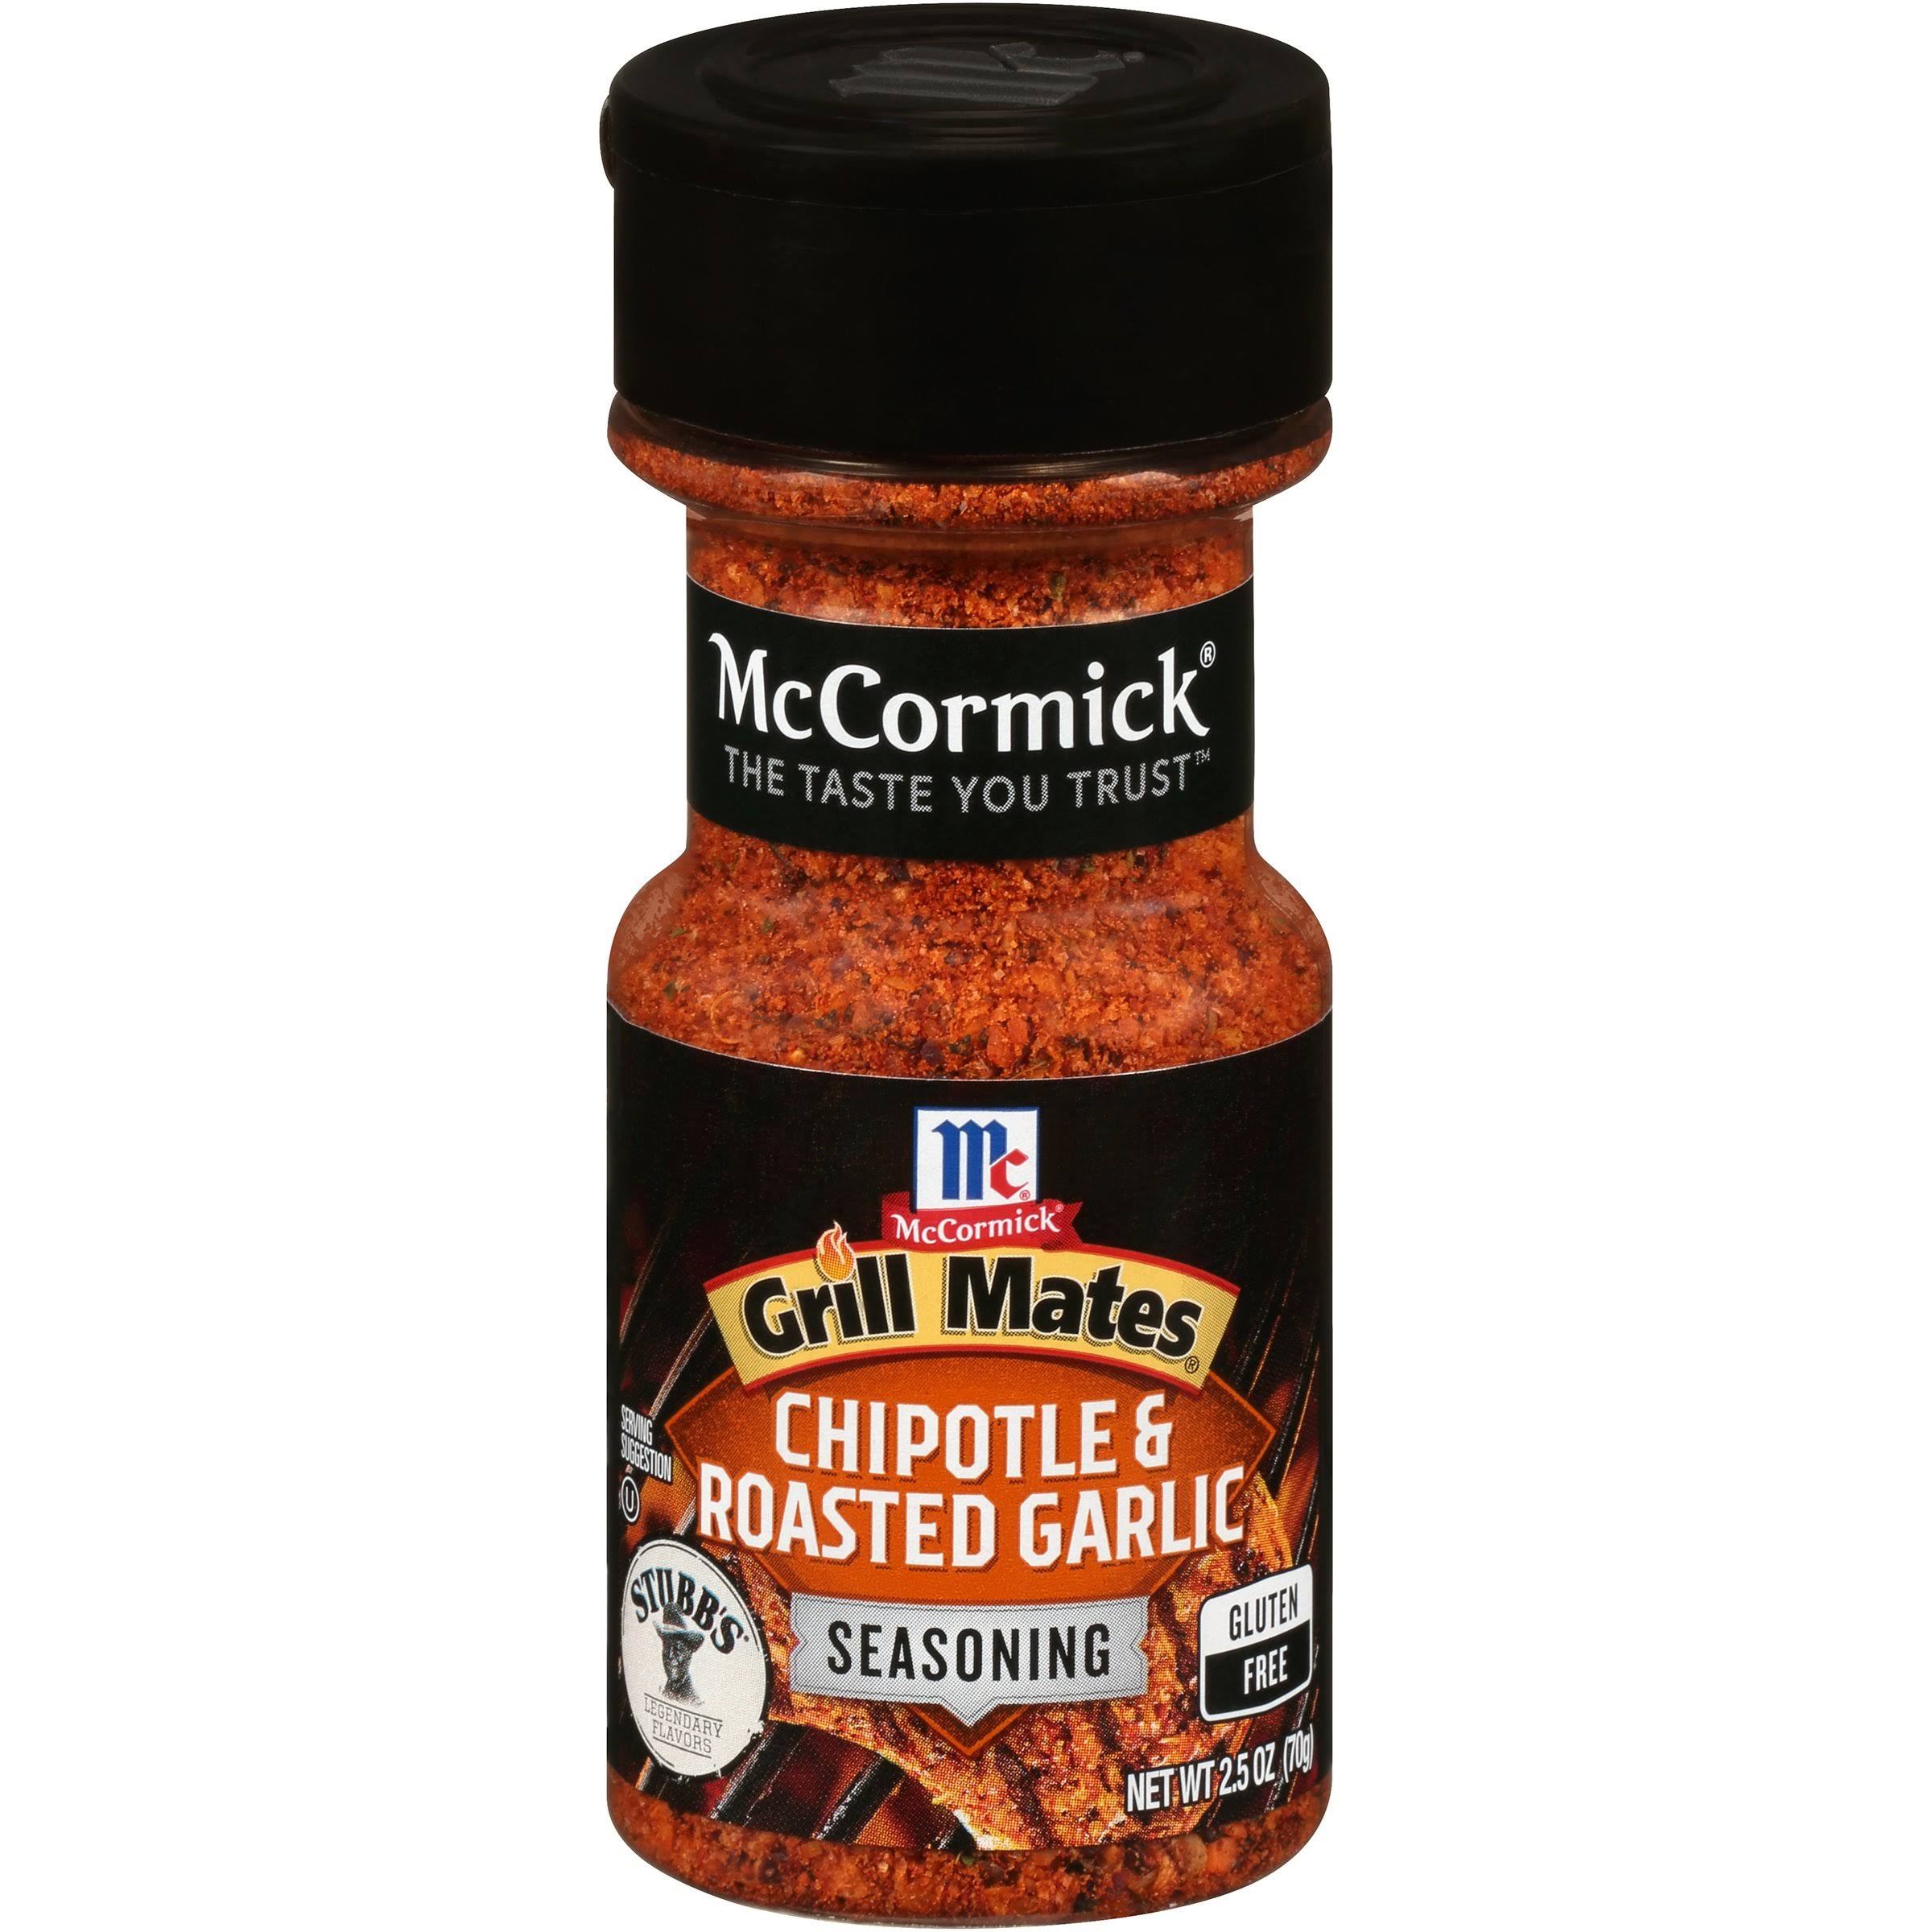 McCormick Grill Mates Seasoning Mix - 2.5oz, Chipotle & Roasted Garlic